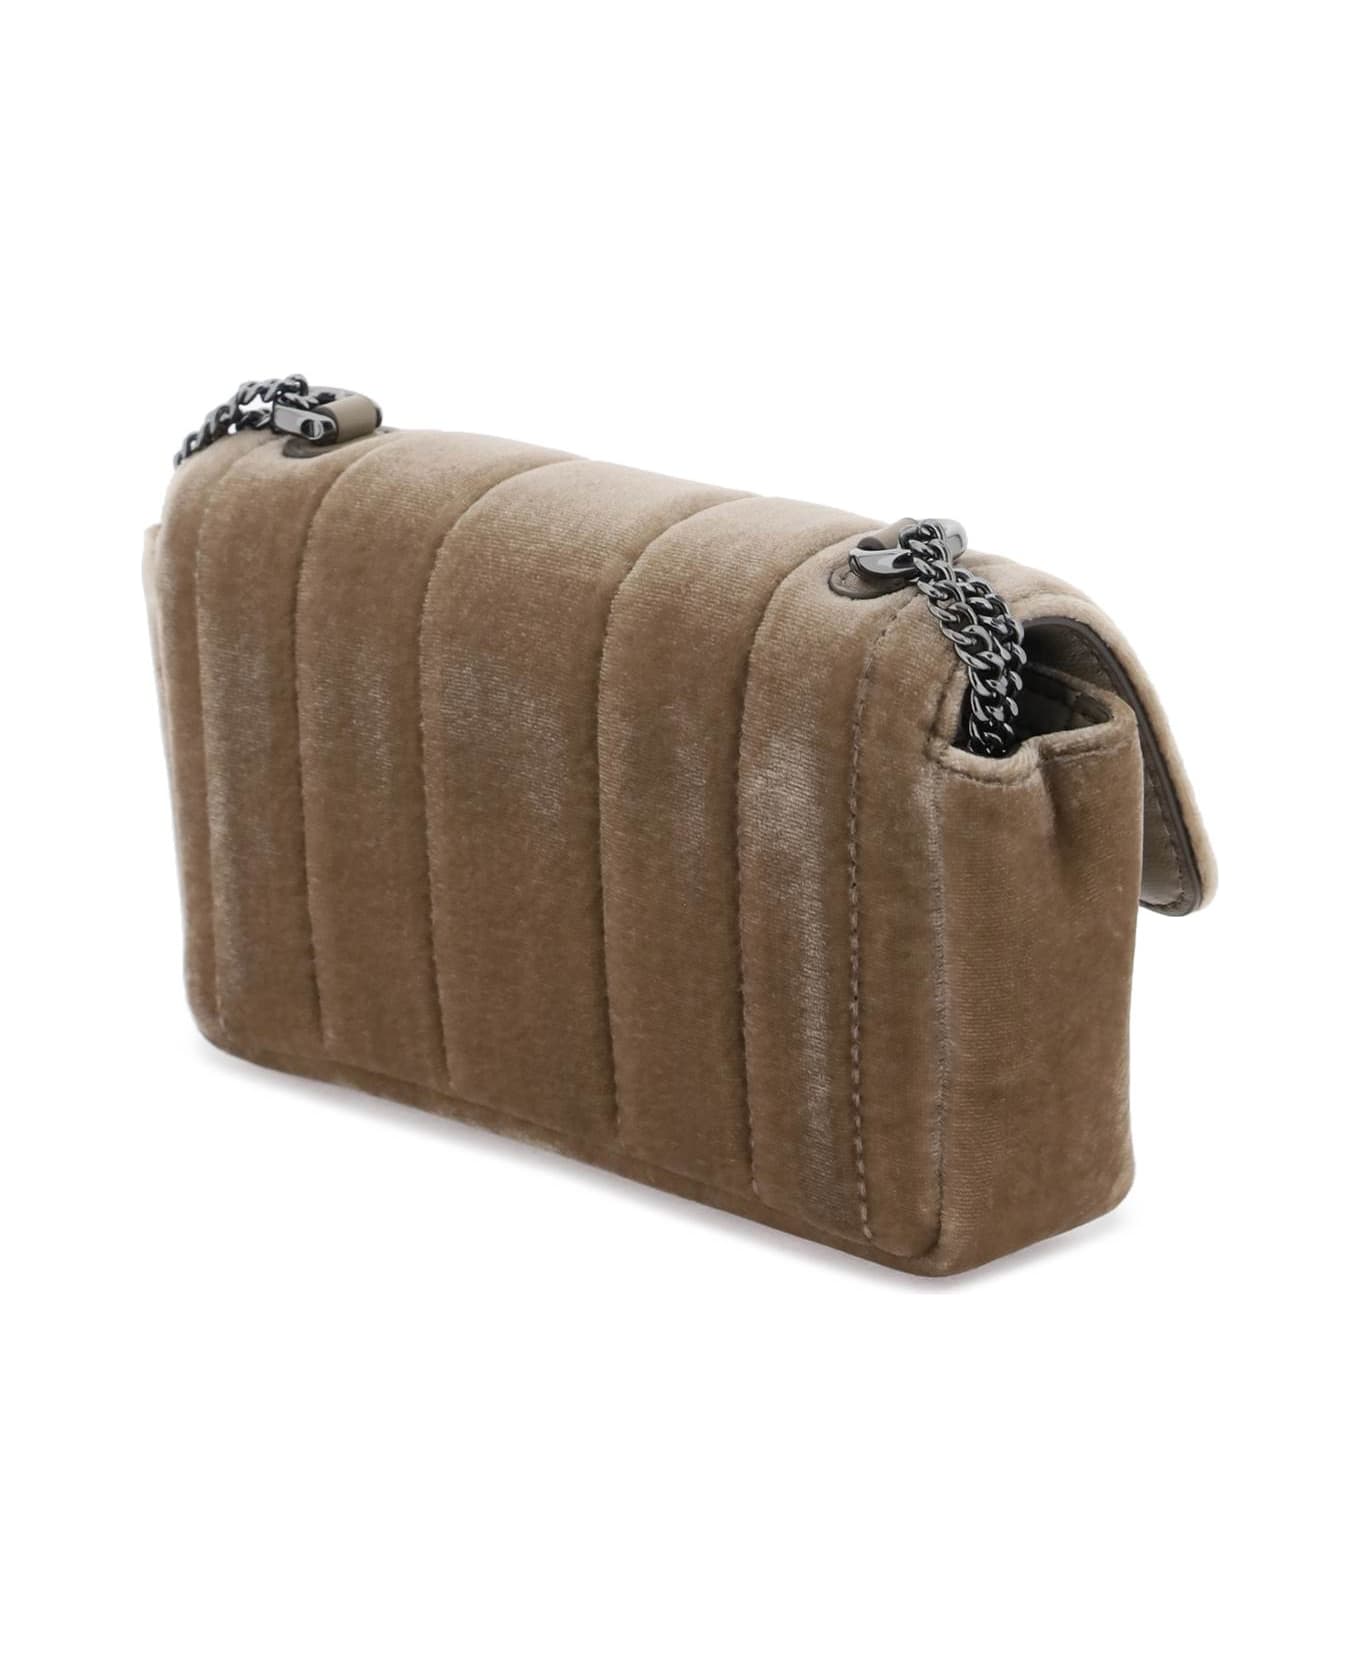 Tory Burch Kira Mini Shoulder Bag - CLASSIC TAUPE (Beige)